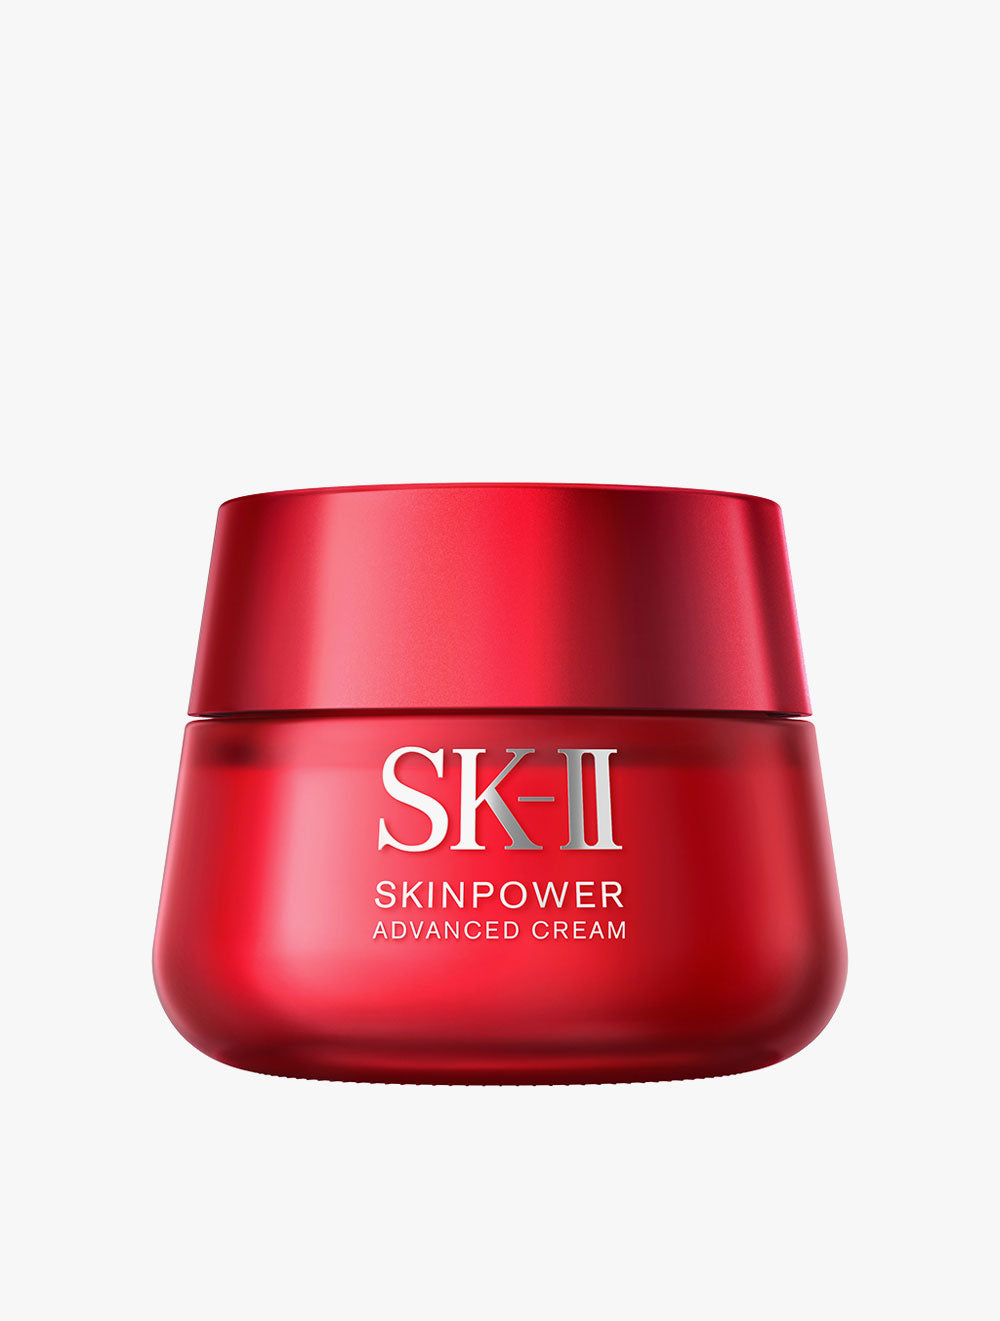 SK-II SKINPOWER Advanced Cream 100G